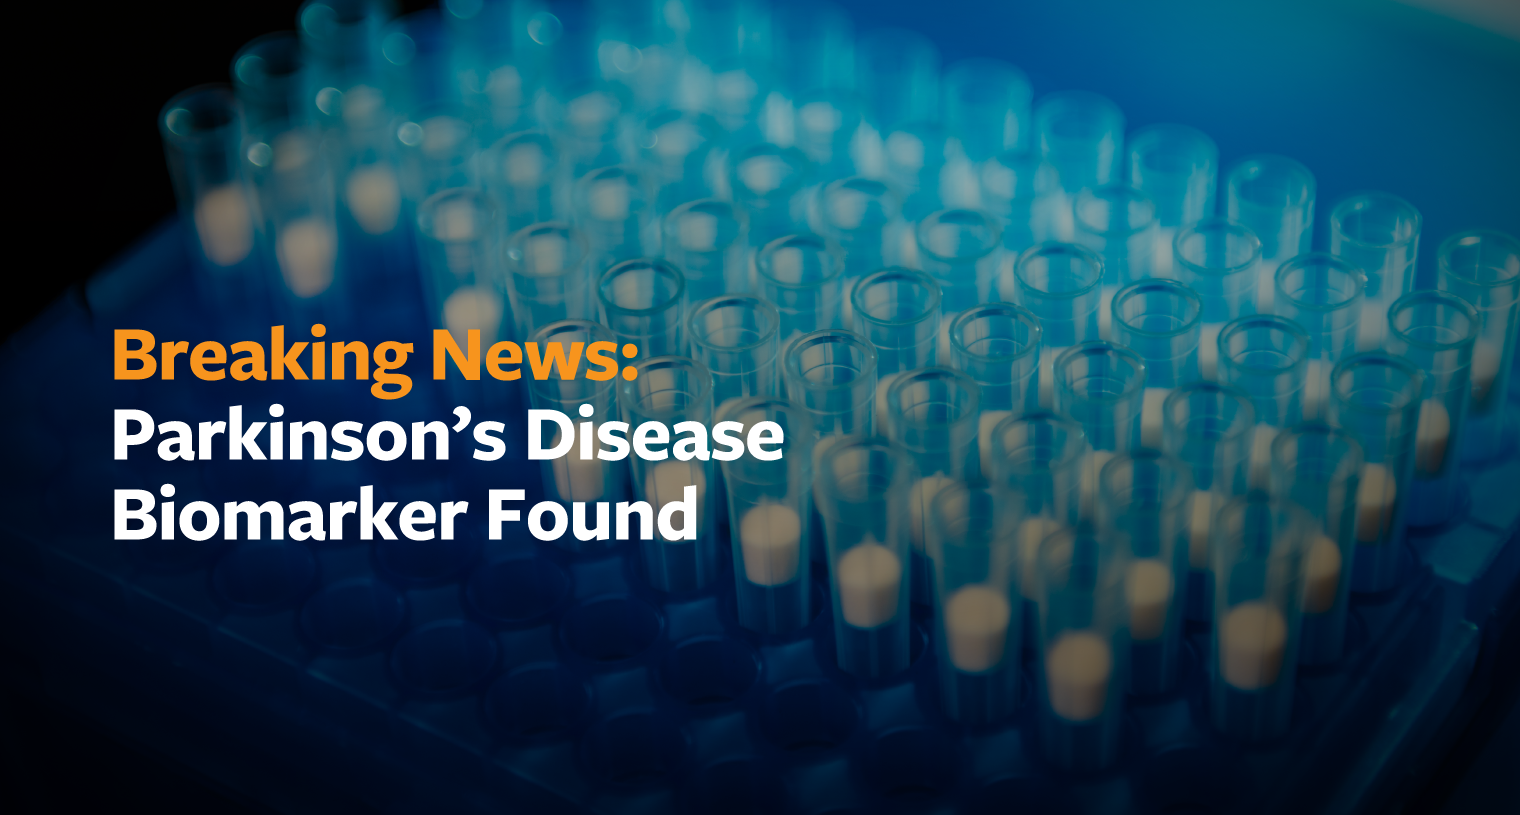 Breaking News: Parkinson's Disease Biomarker Found.